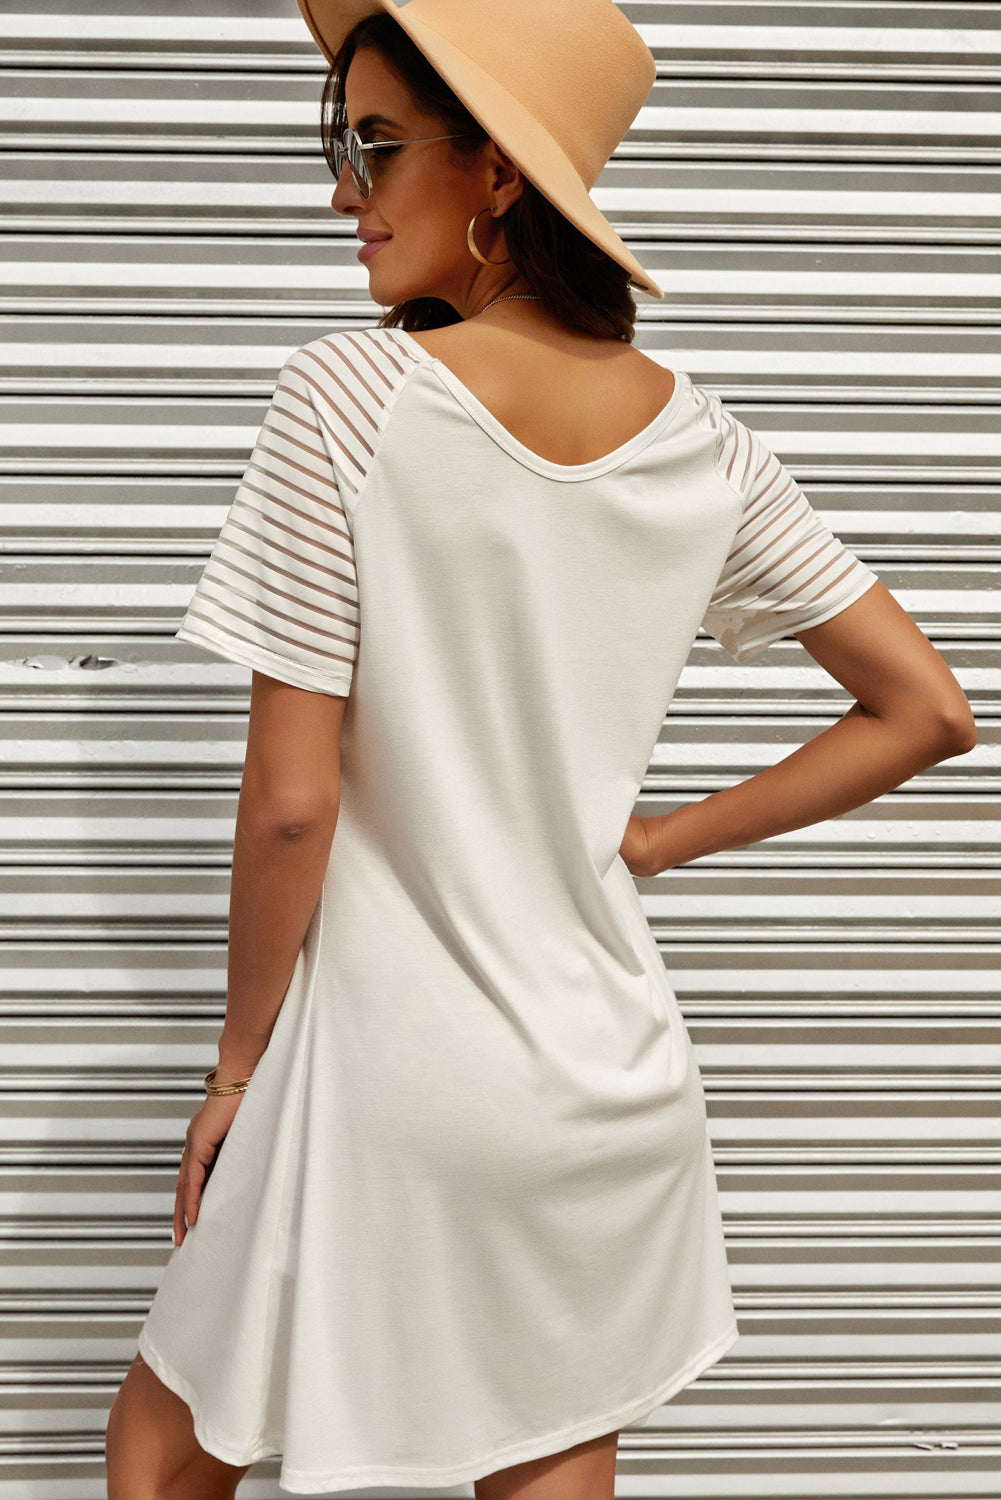 Sheer Striped Raglan Sleeve T-Shirt Dress - Online Only